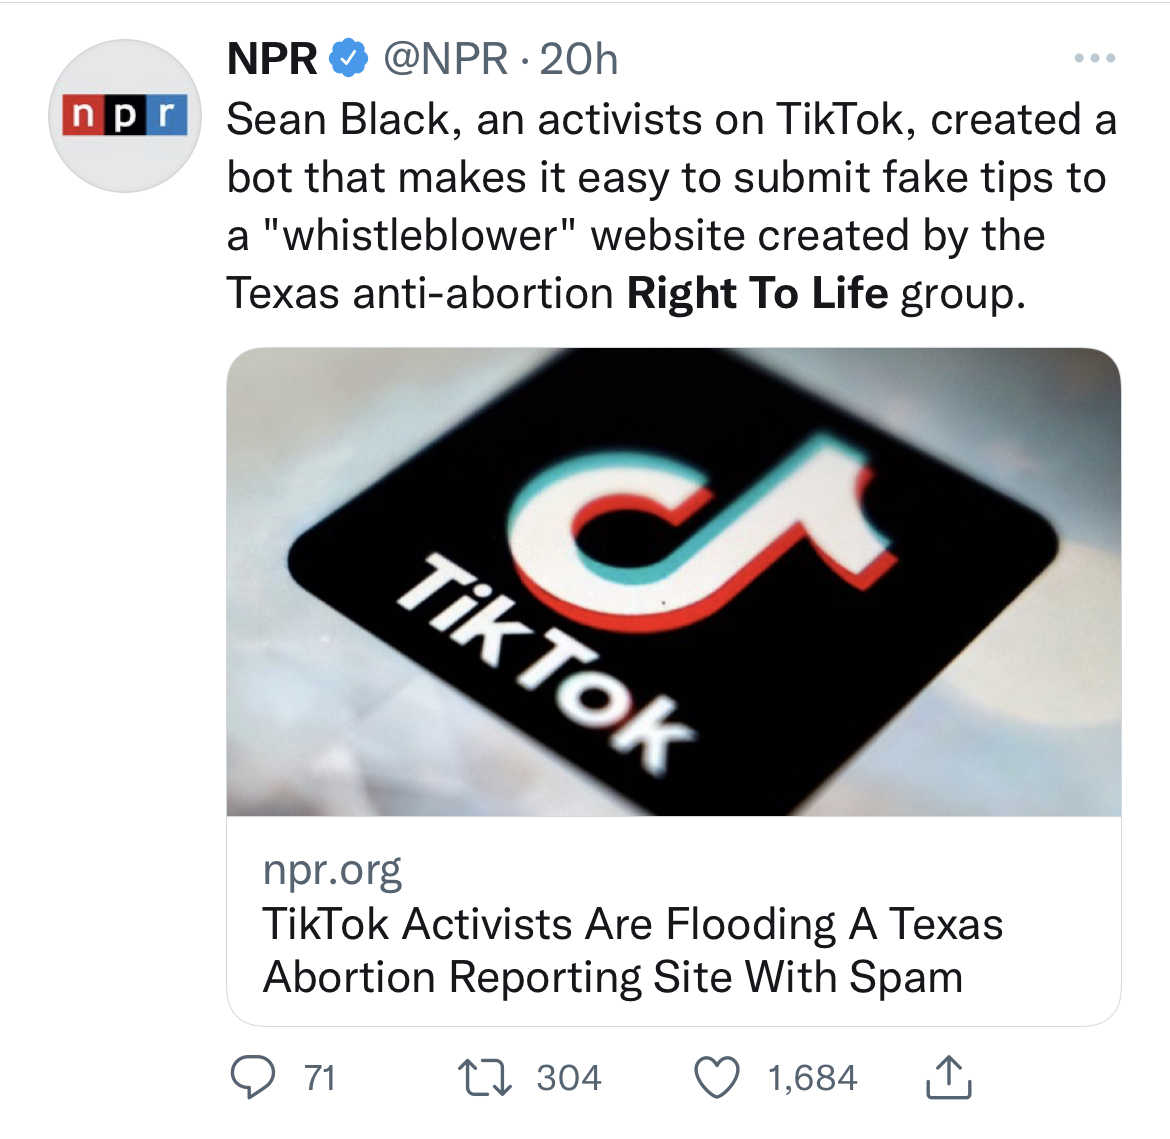 Tweet about NPR STORY 